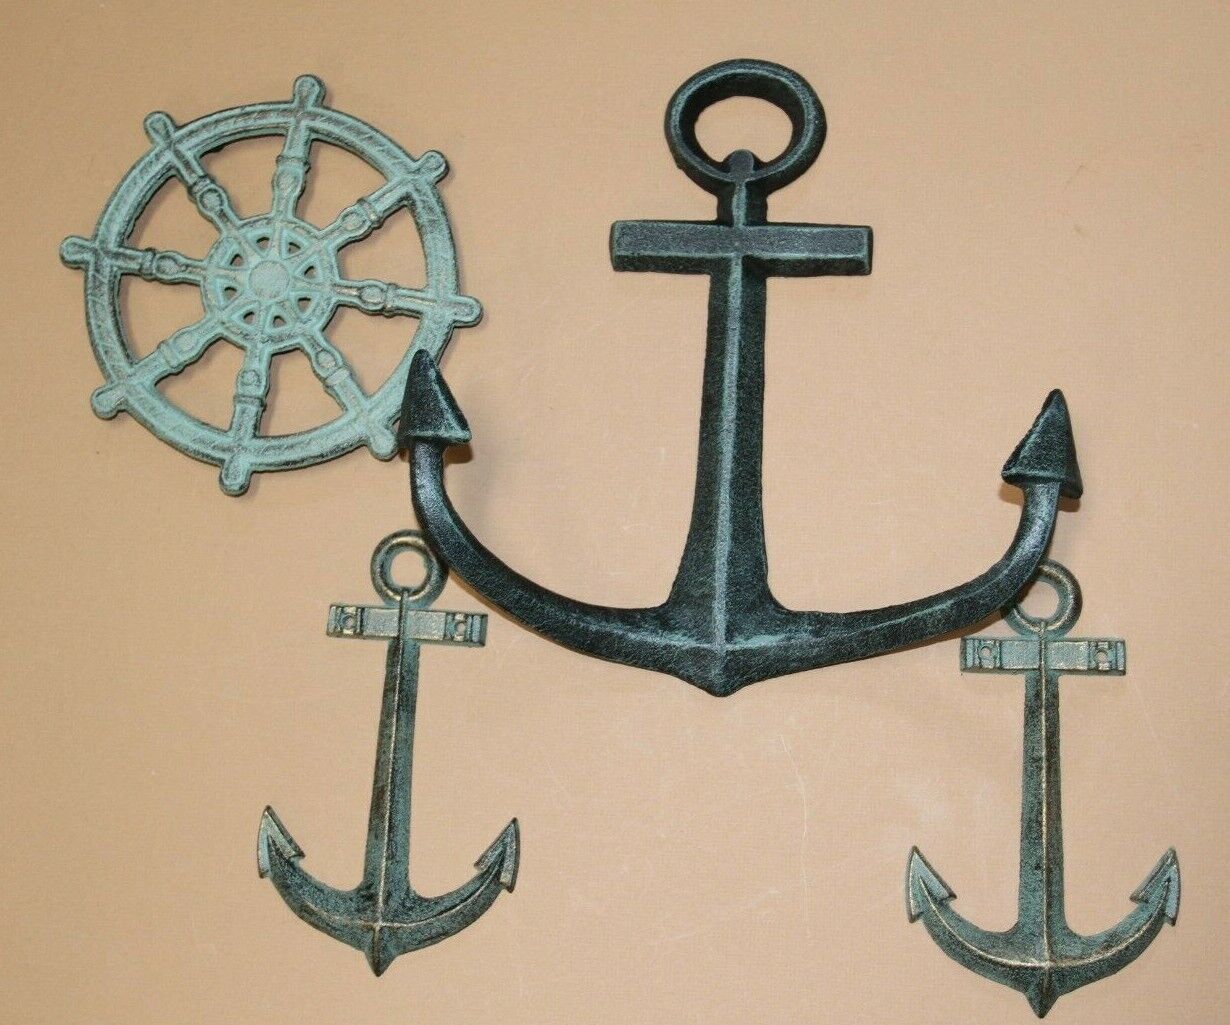 Maritime Home Decor Christmas Gift Cast Iron Helm Anchor, Coastal Fishing 4 Pcs